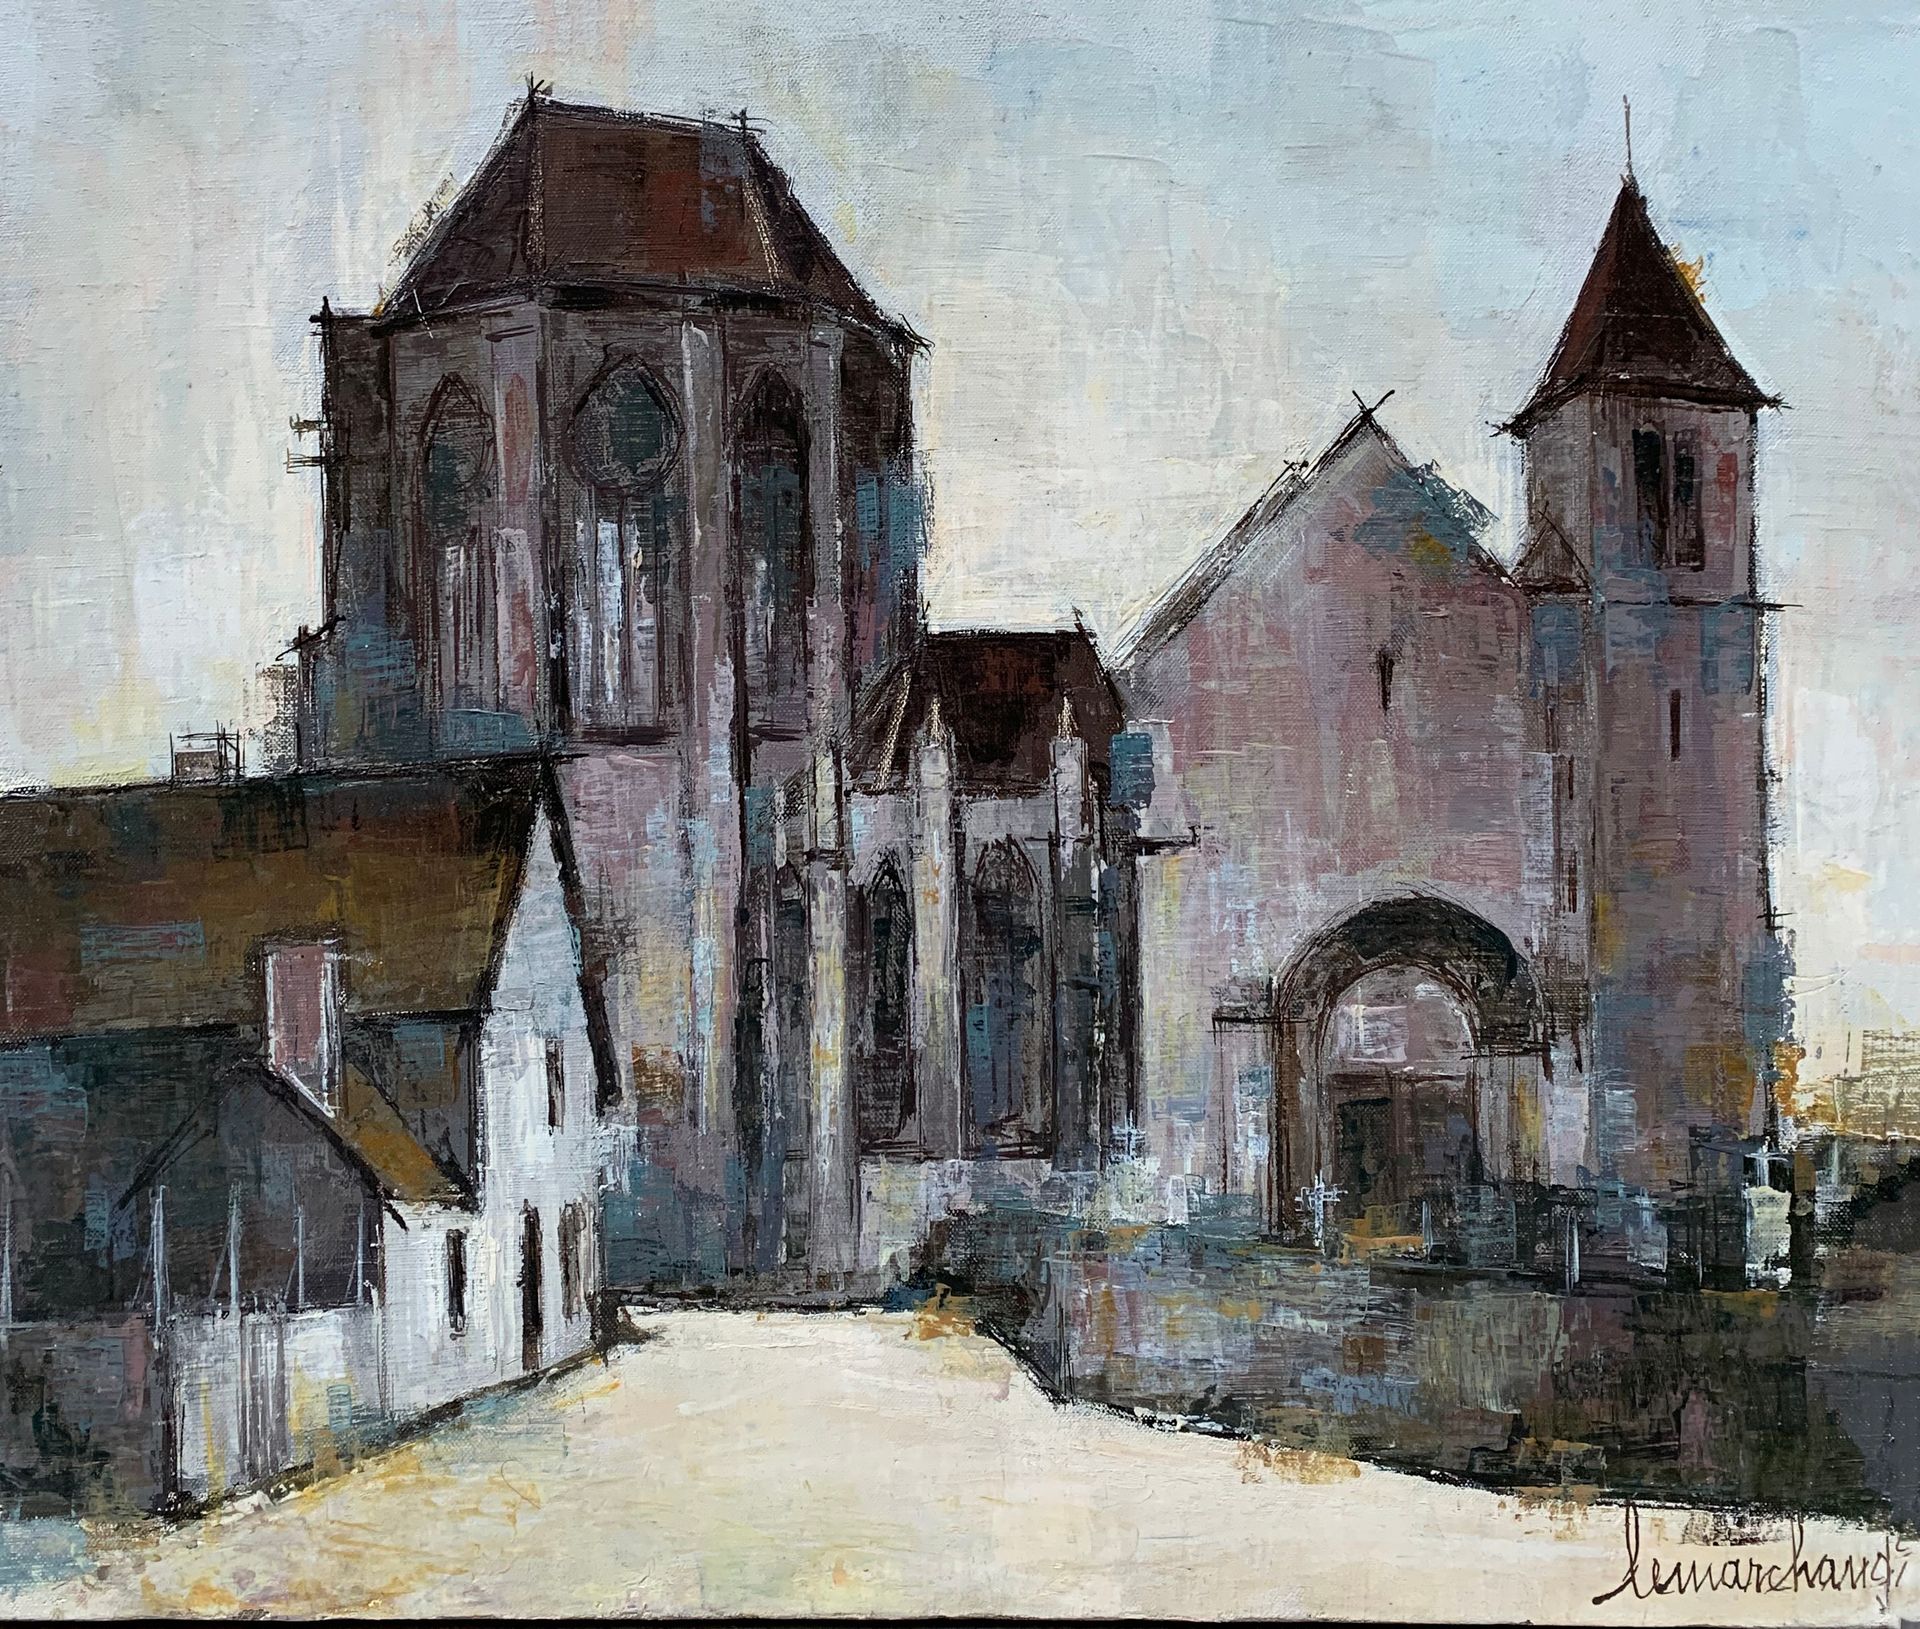 Null 皮埃尔-莱马赫德 (1906-1970)

教会

布面油画，右下角有签名

46 x 55厘米。